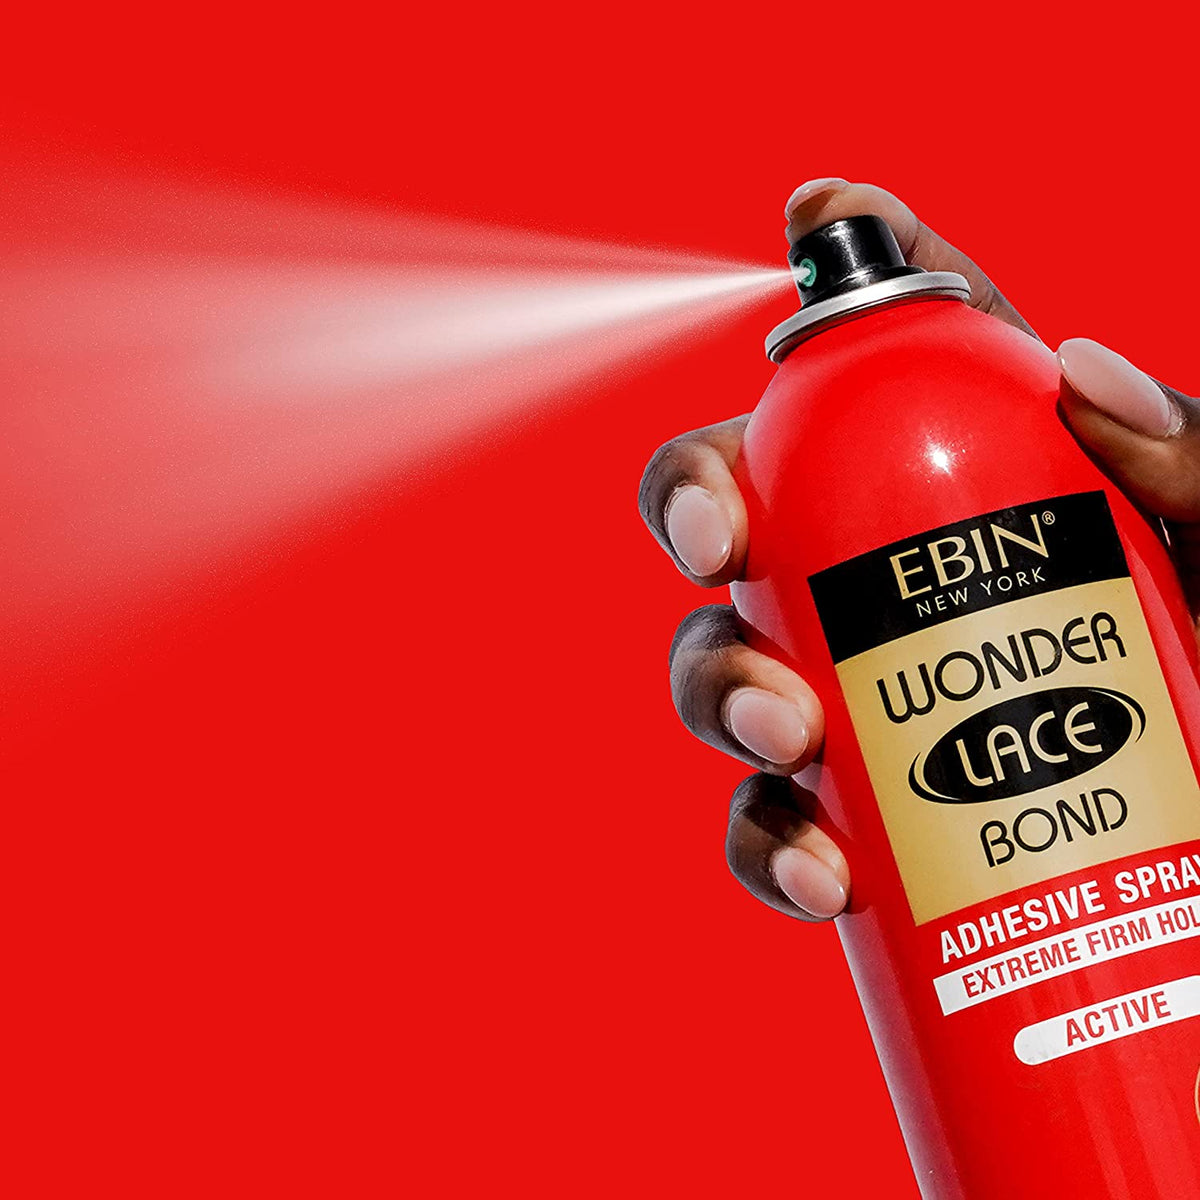 Ebin Wonder Lace Bond Adhesive Spray Active